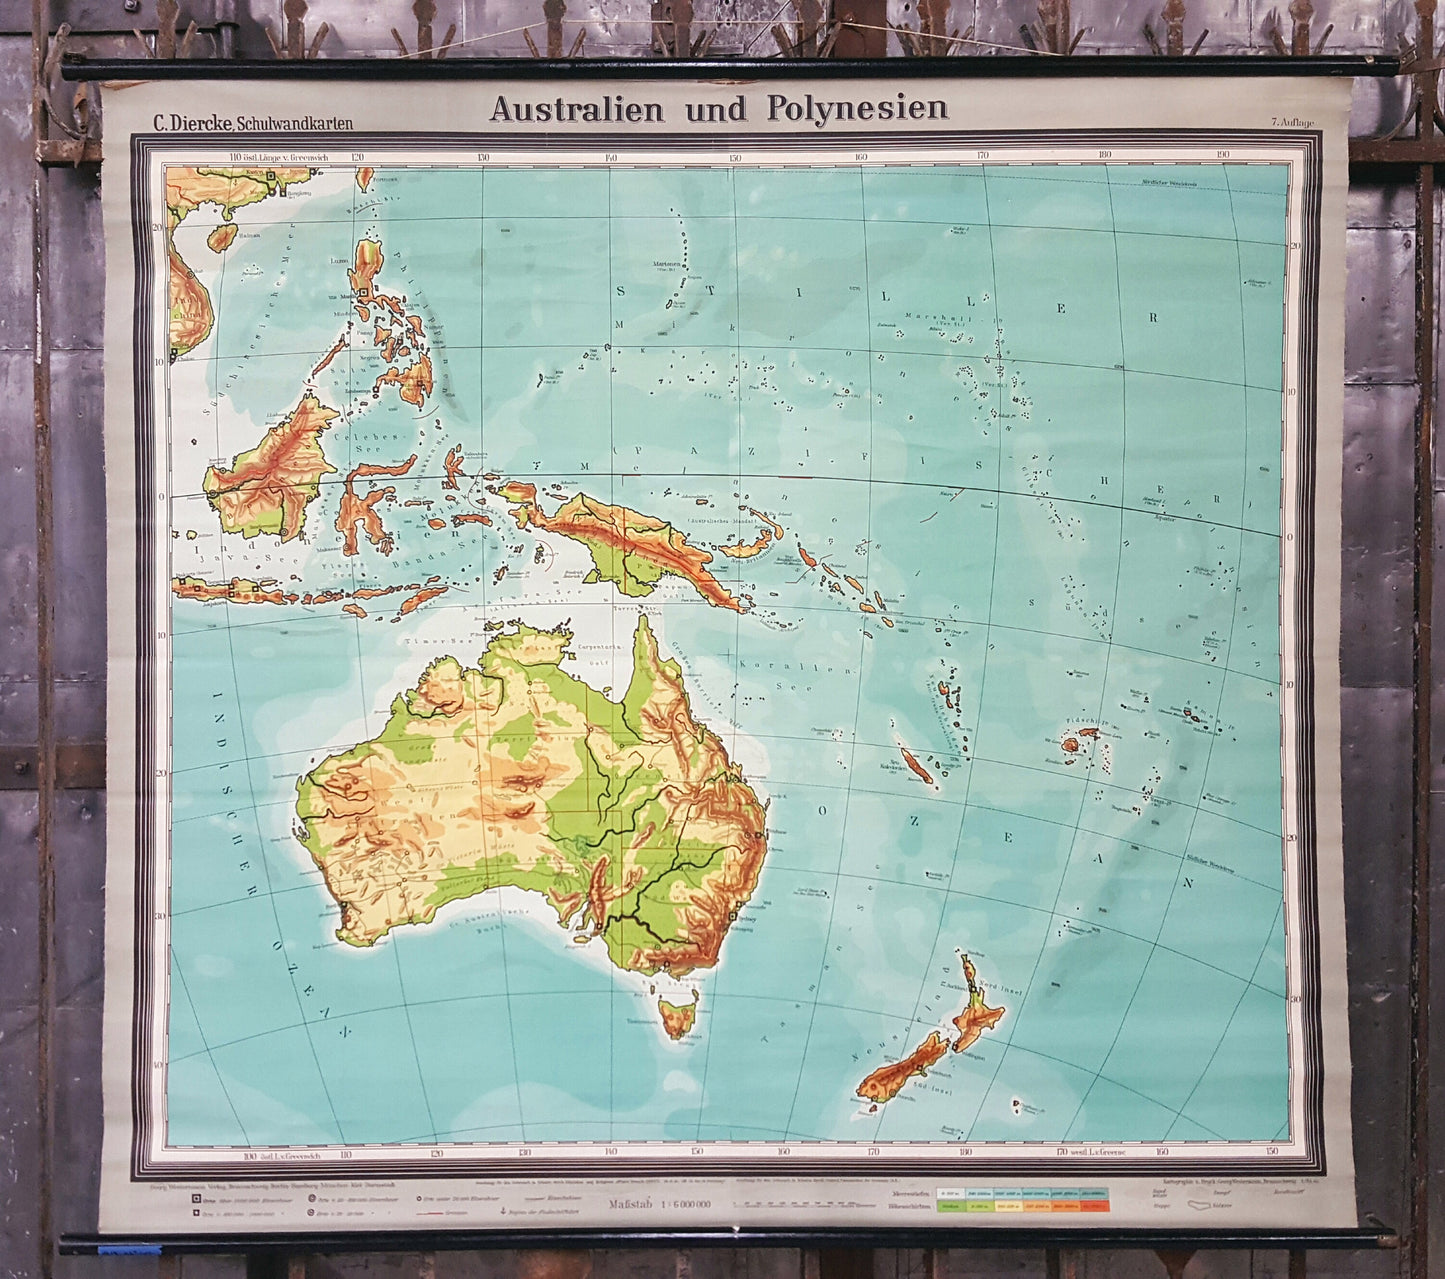 German School Map of Australia/Polynesia